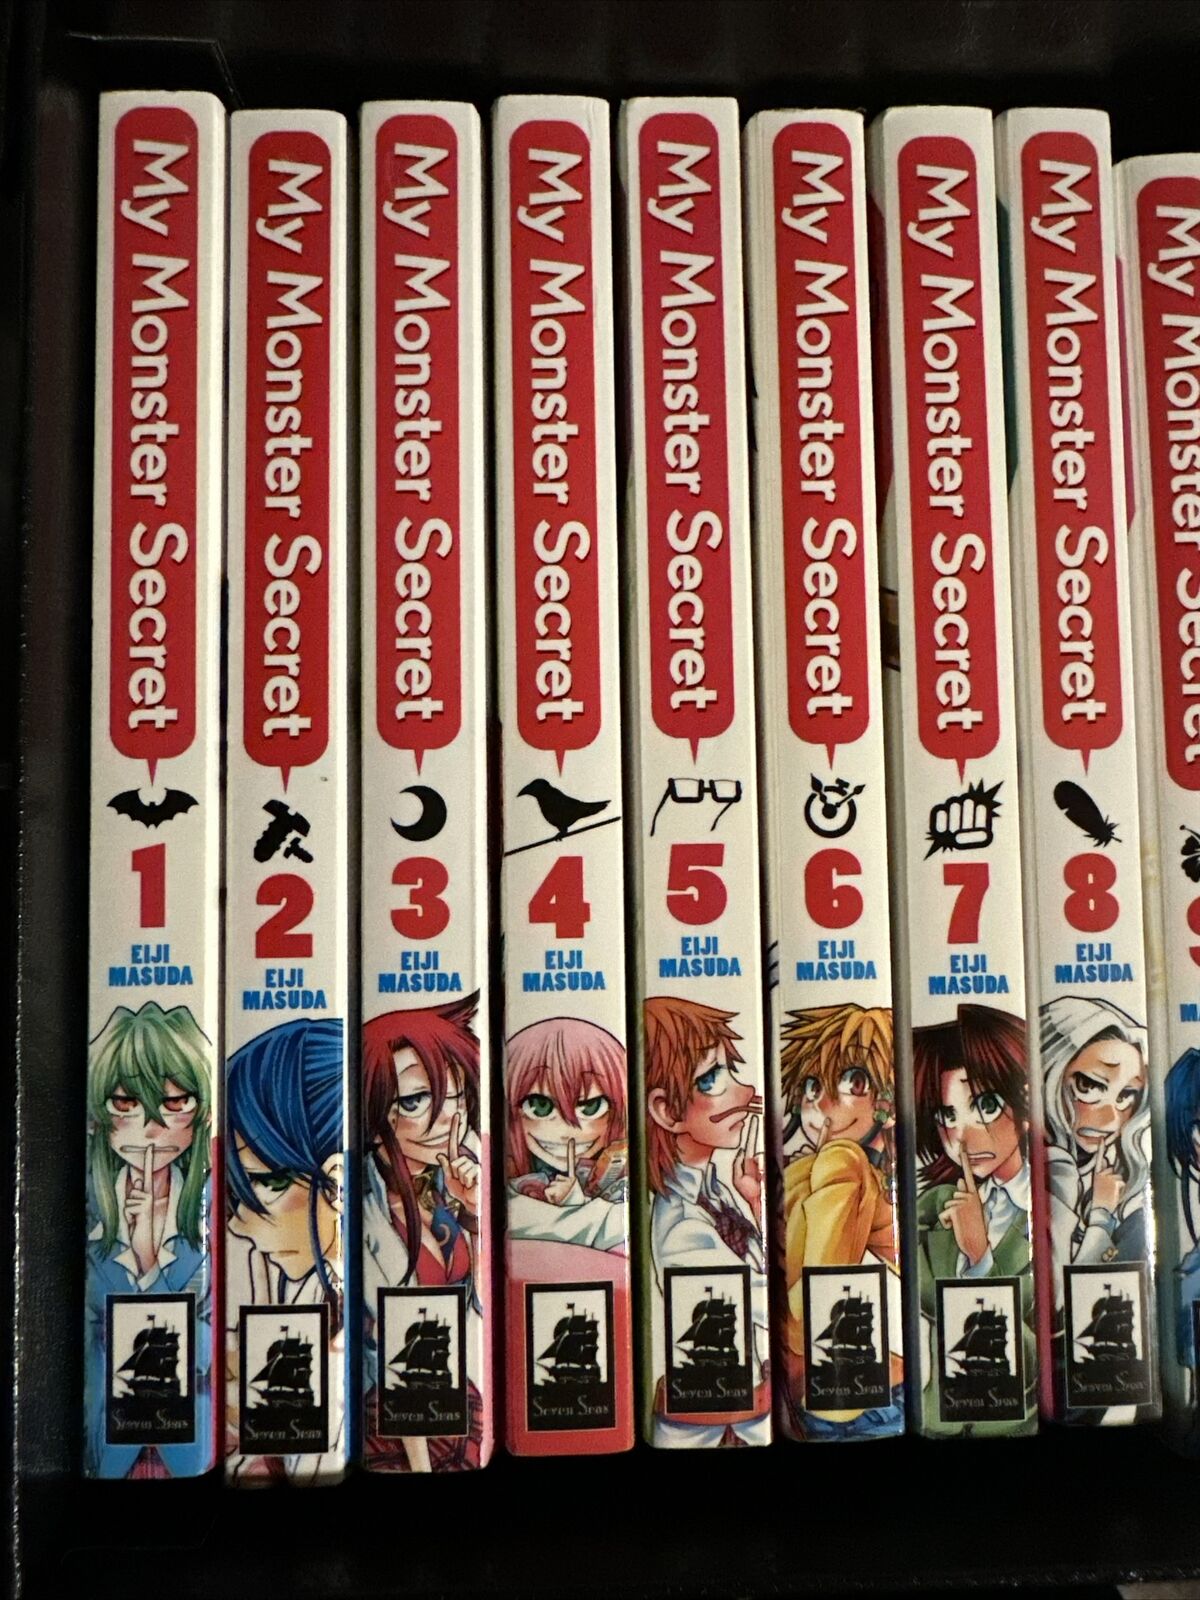 My Monster Secret Volume 1-22 Complete Manga by Eiji Masuda